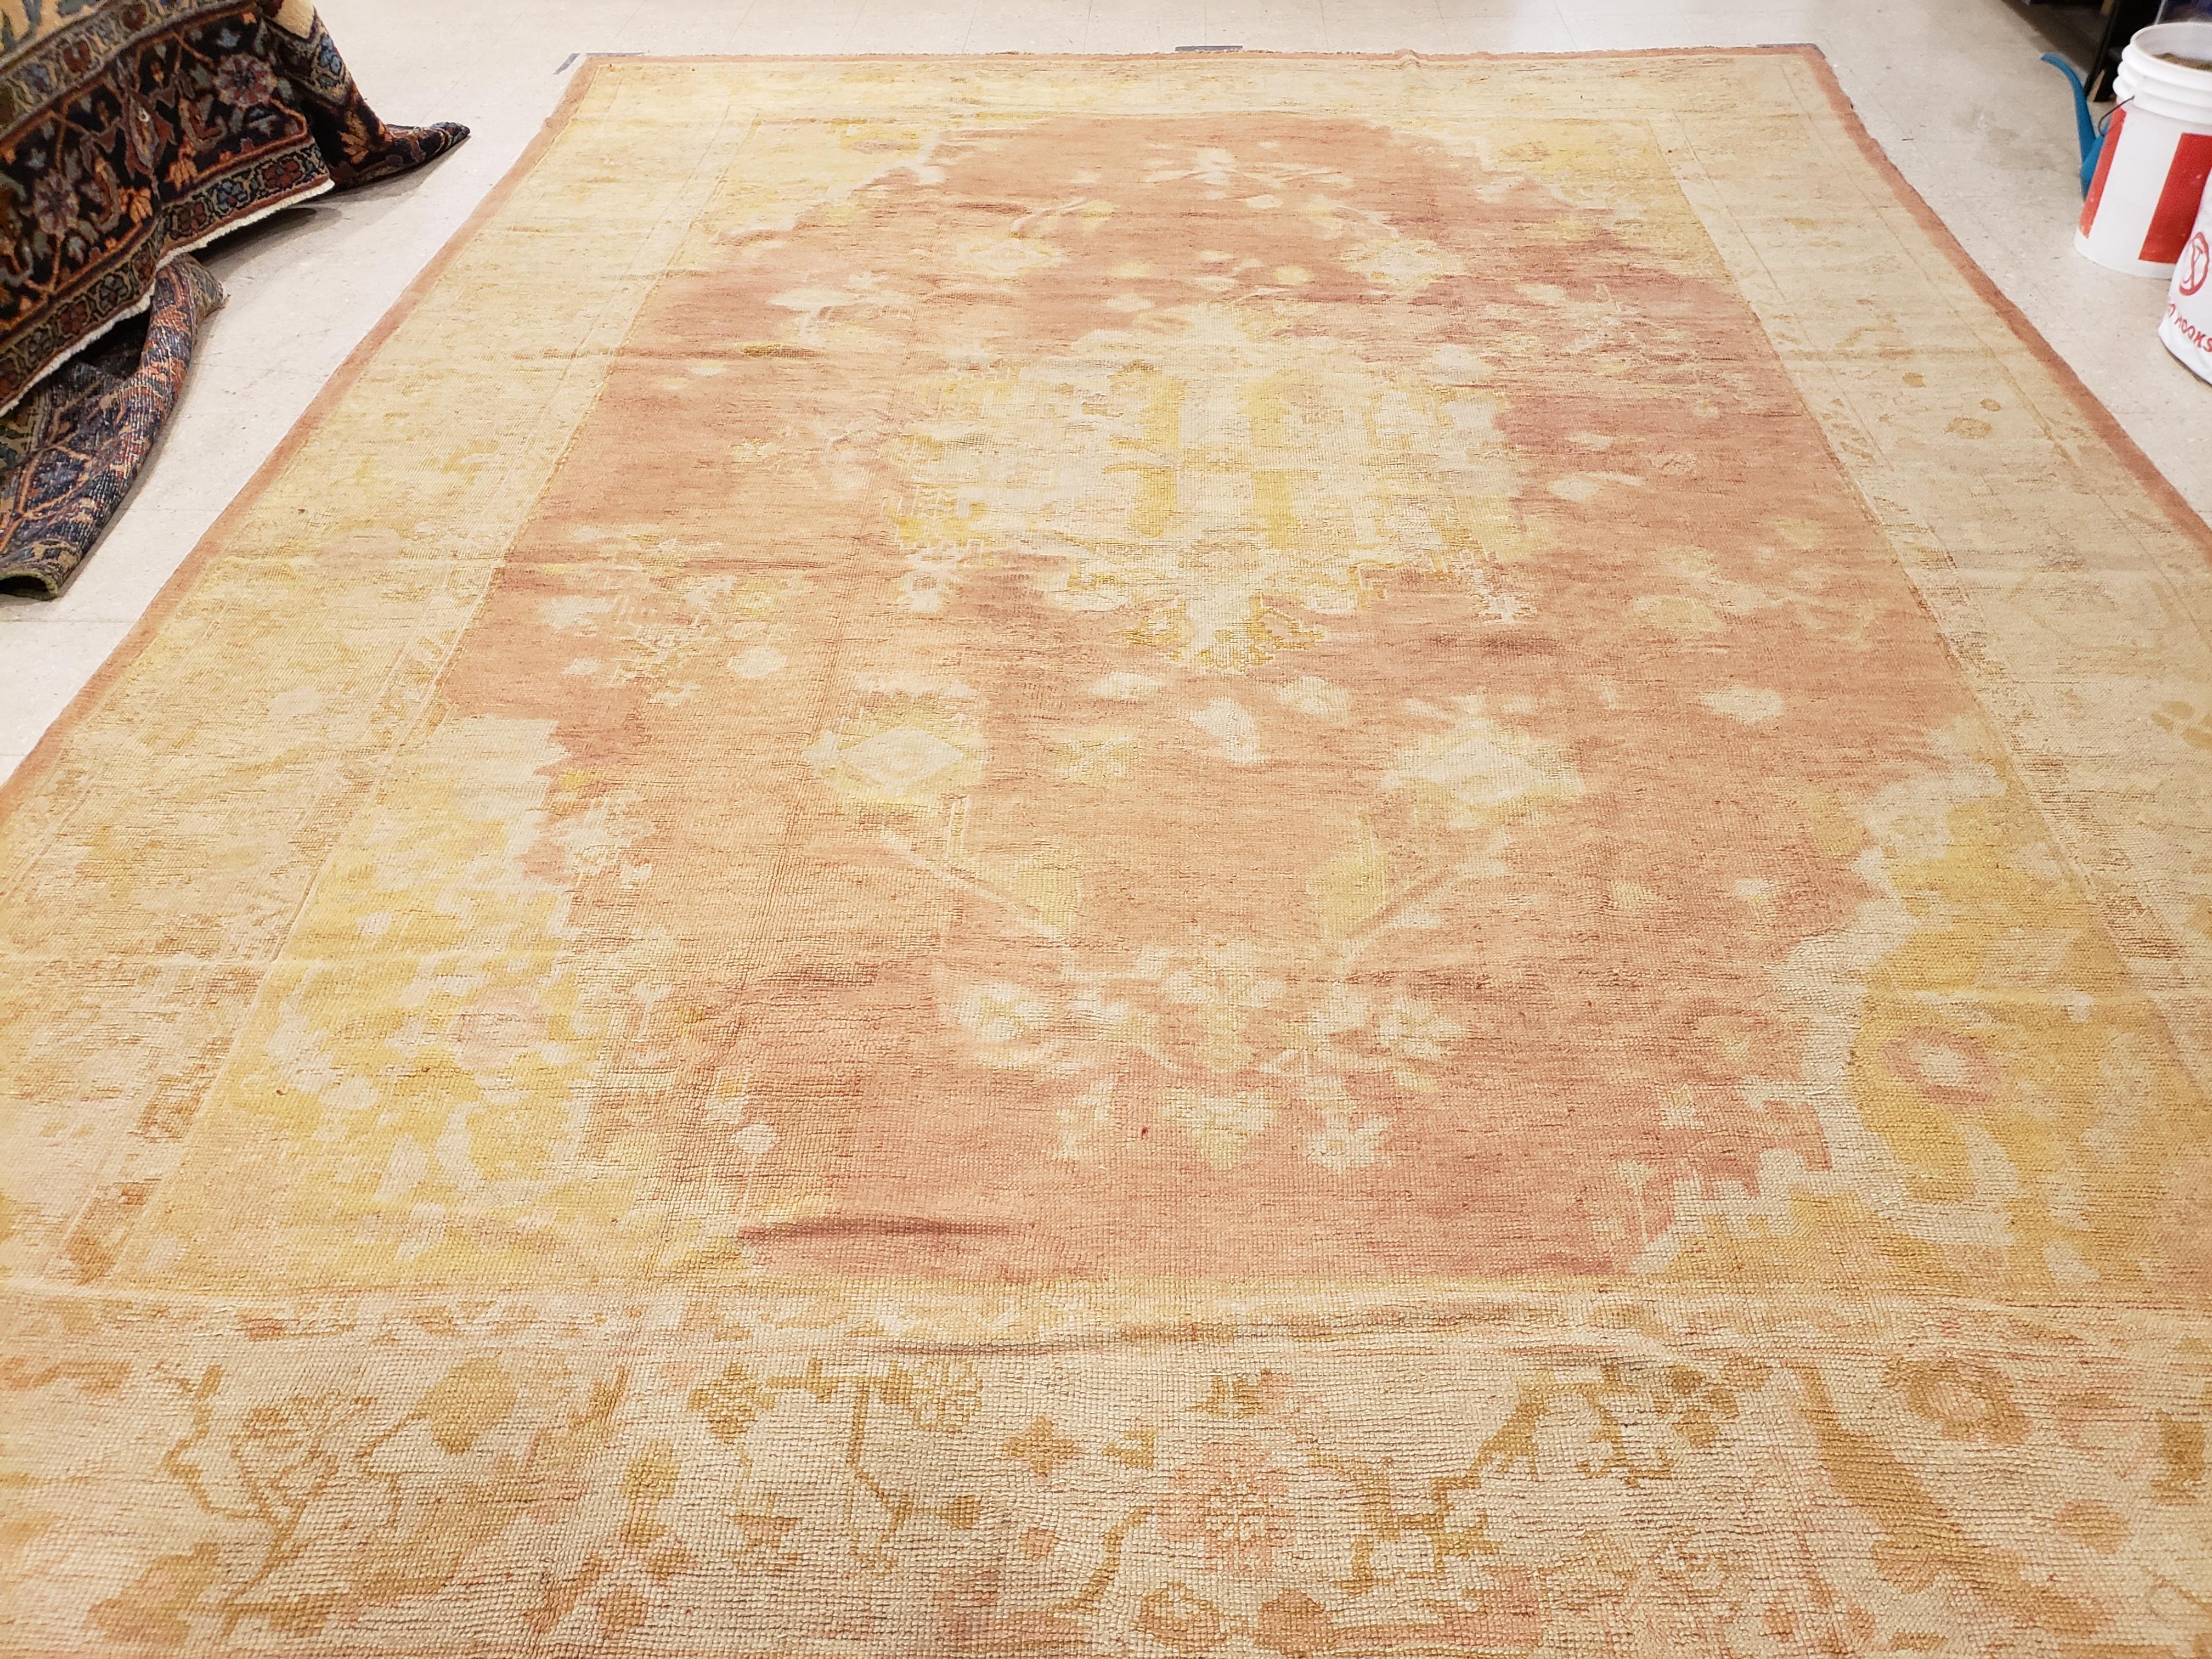 Antique Oushak Carpet, Handmade Turkish Oriental Rug, Beige, Taupe, Soft Coral 3